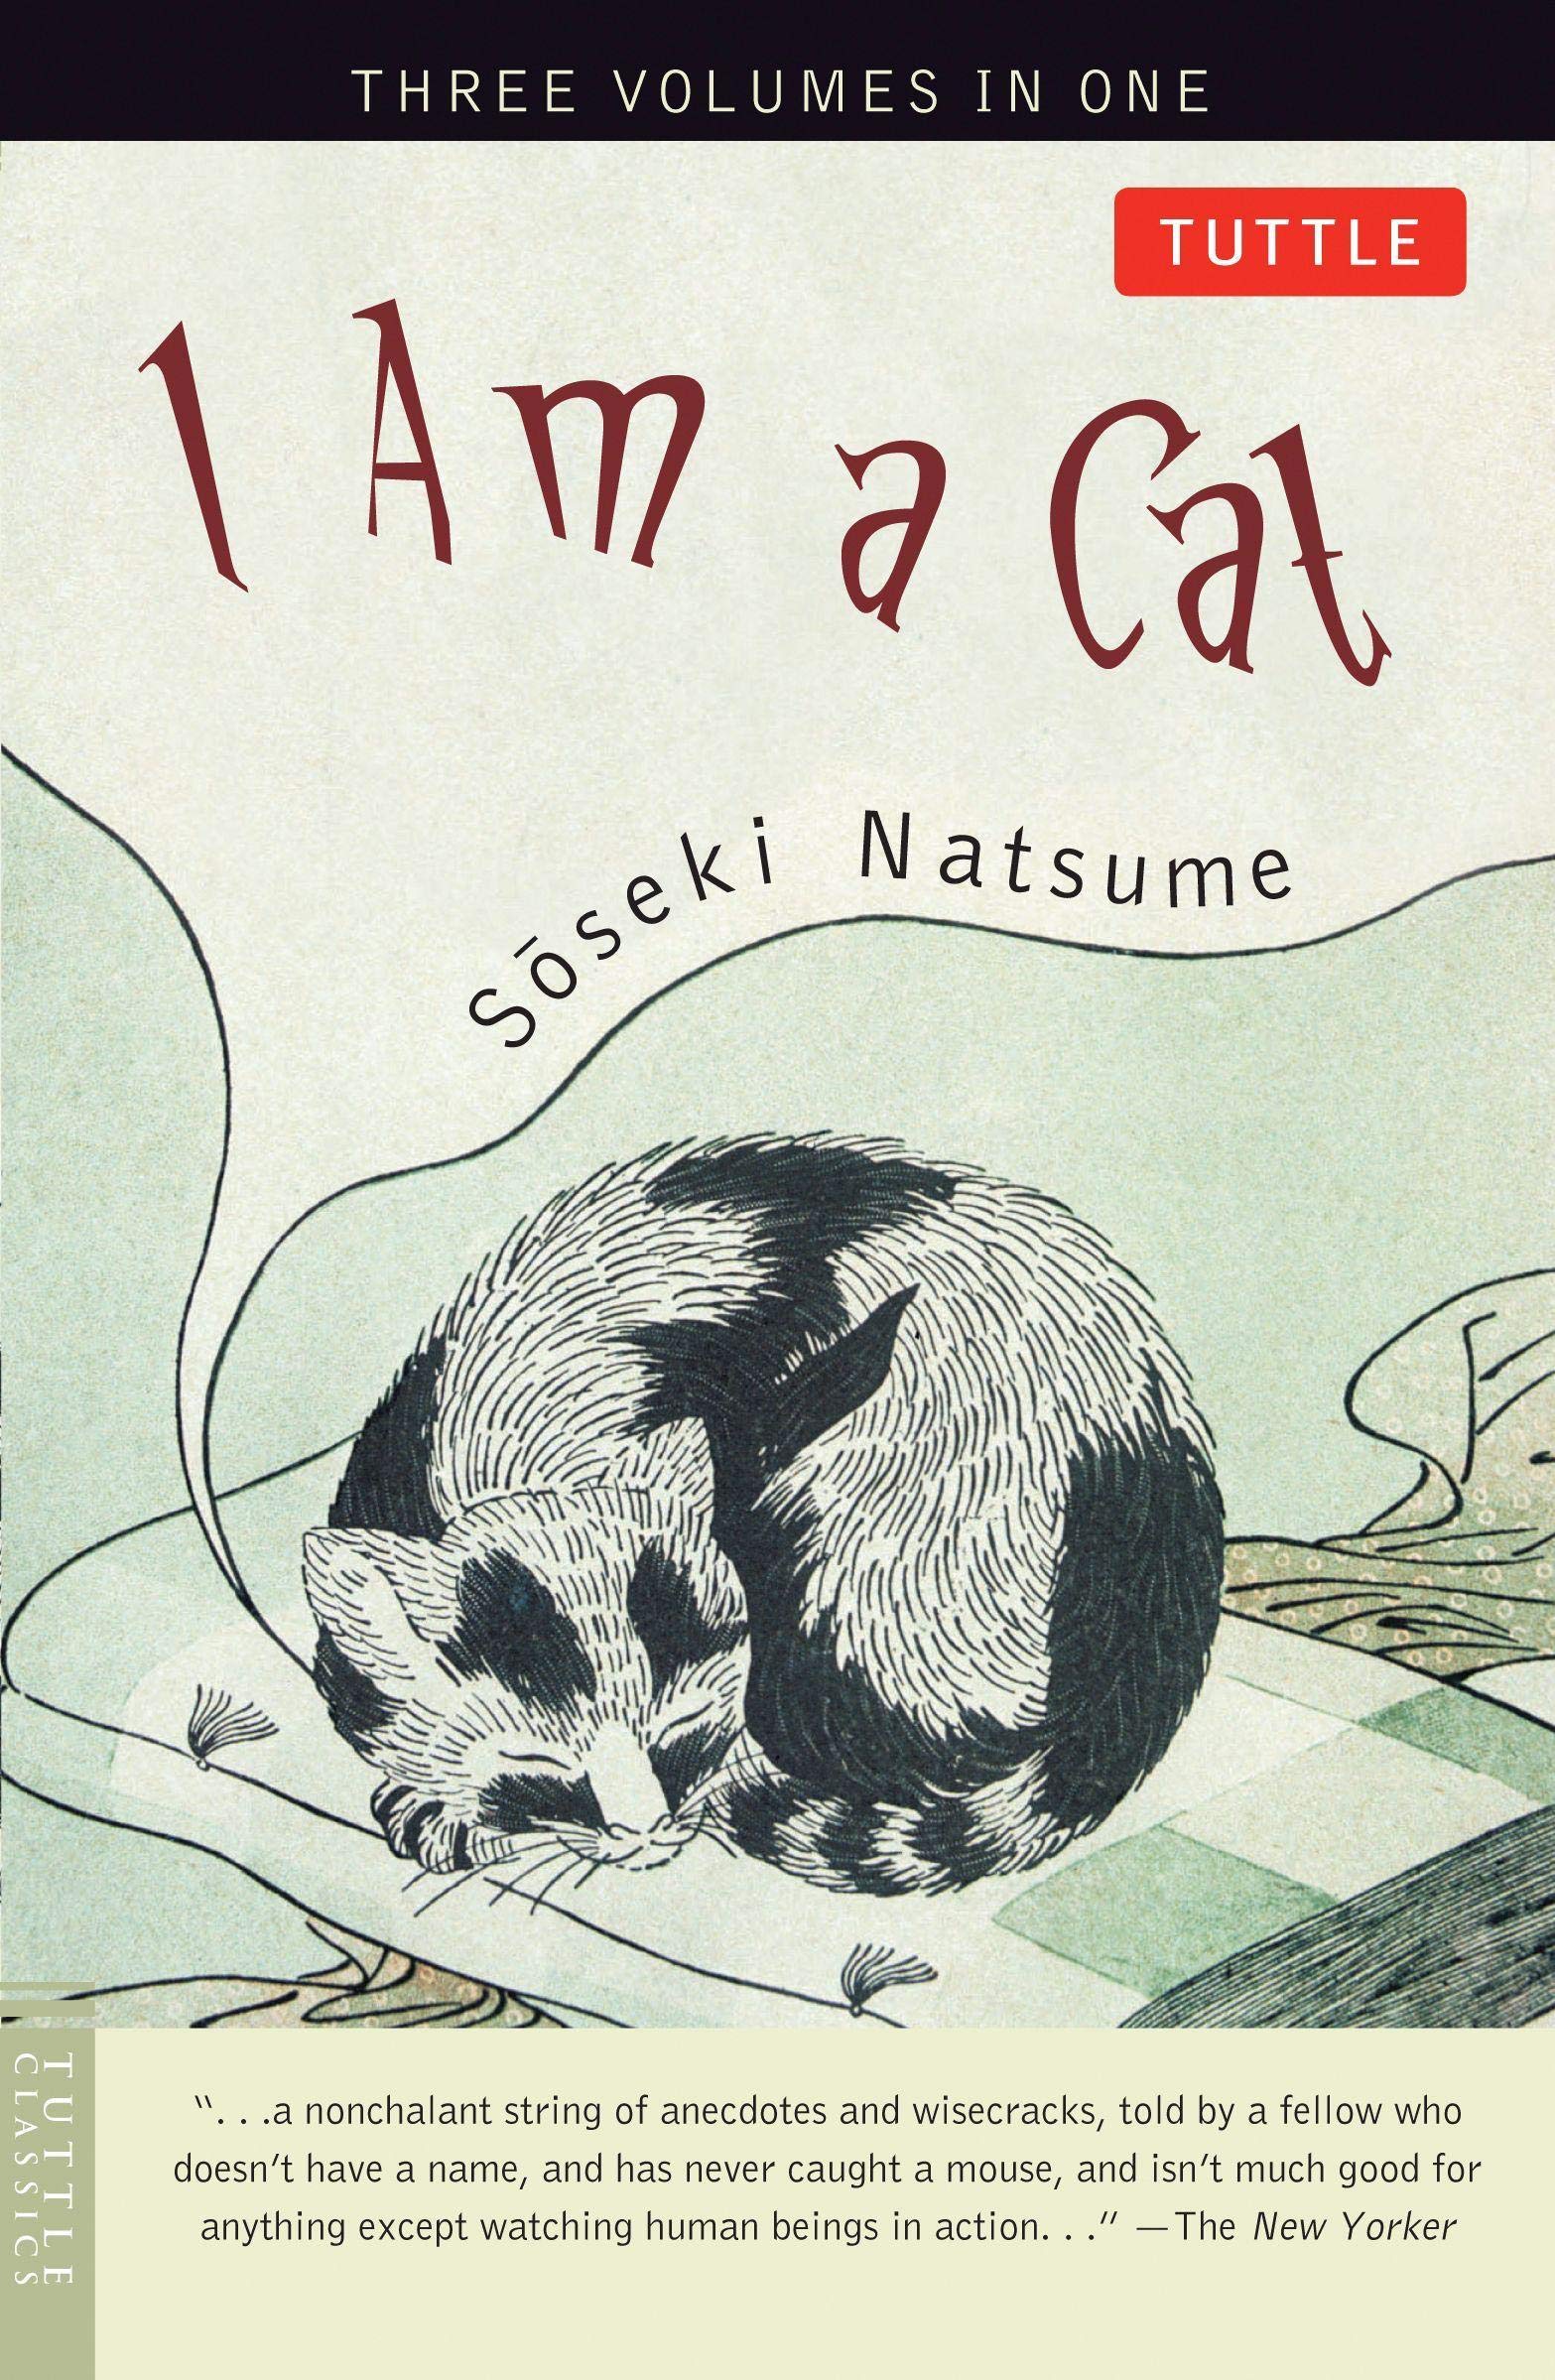 Natsume Sōseki: I am a cat (2002, Tuttle, Airlift)